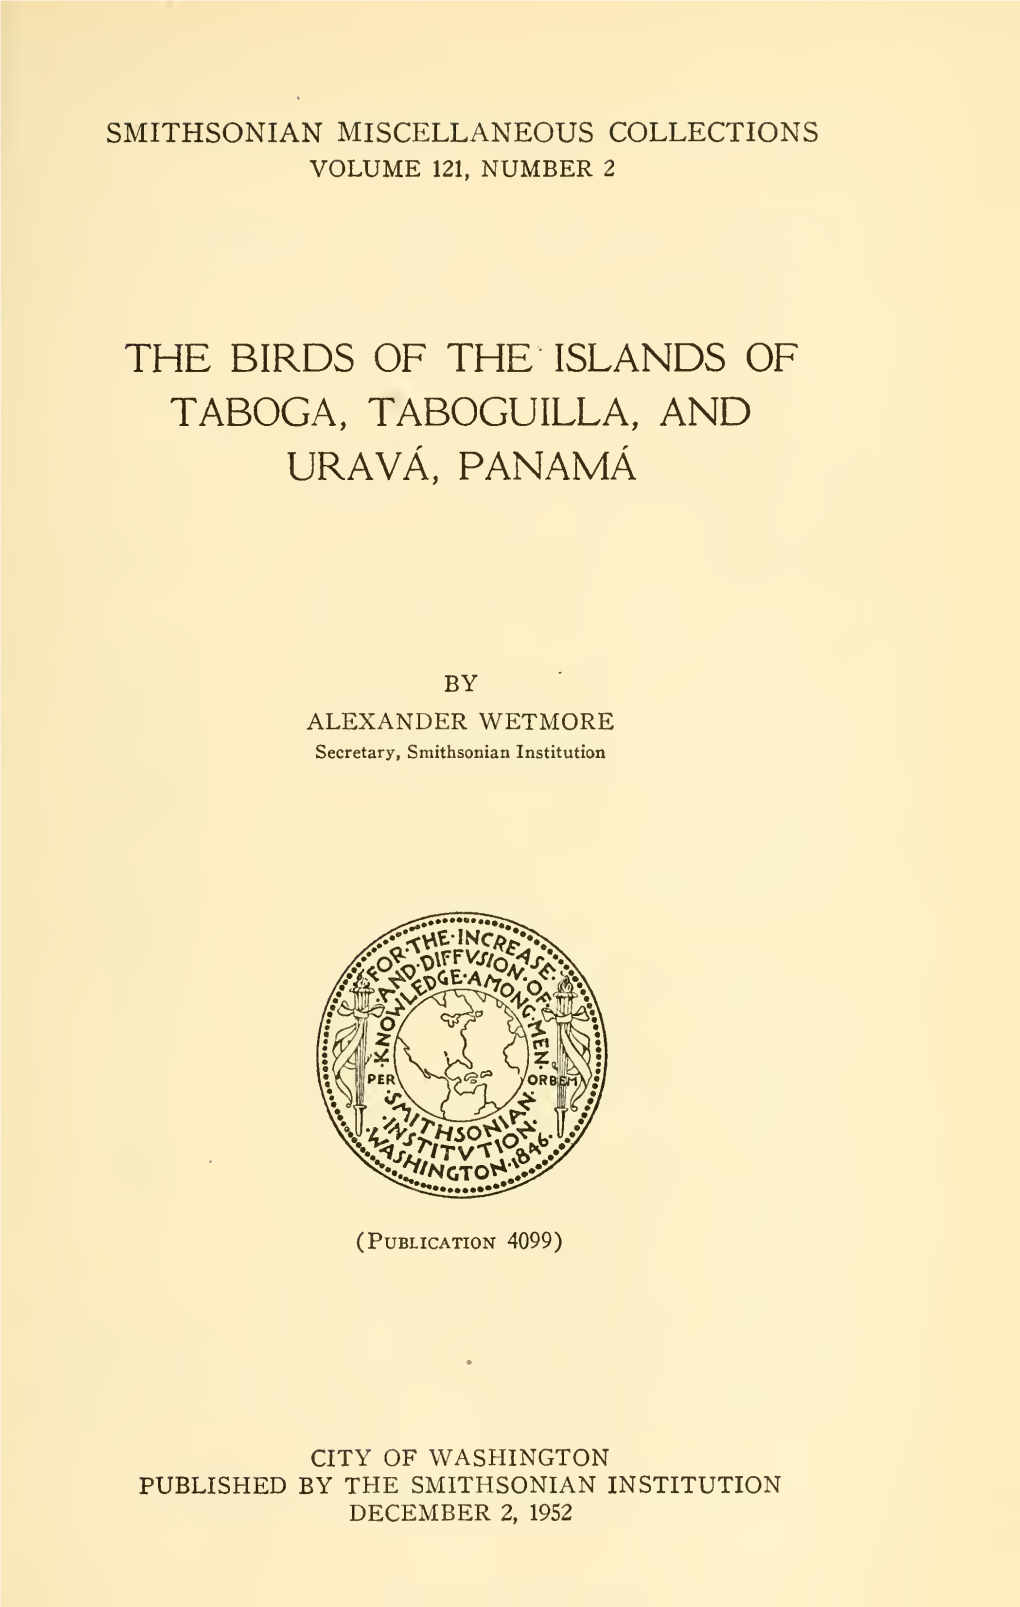 The Birds of the Islands of Taboga, Taboguilla, and Urava, Panama